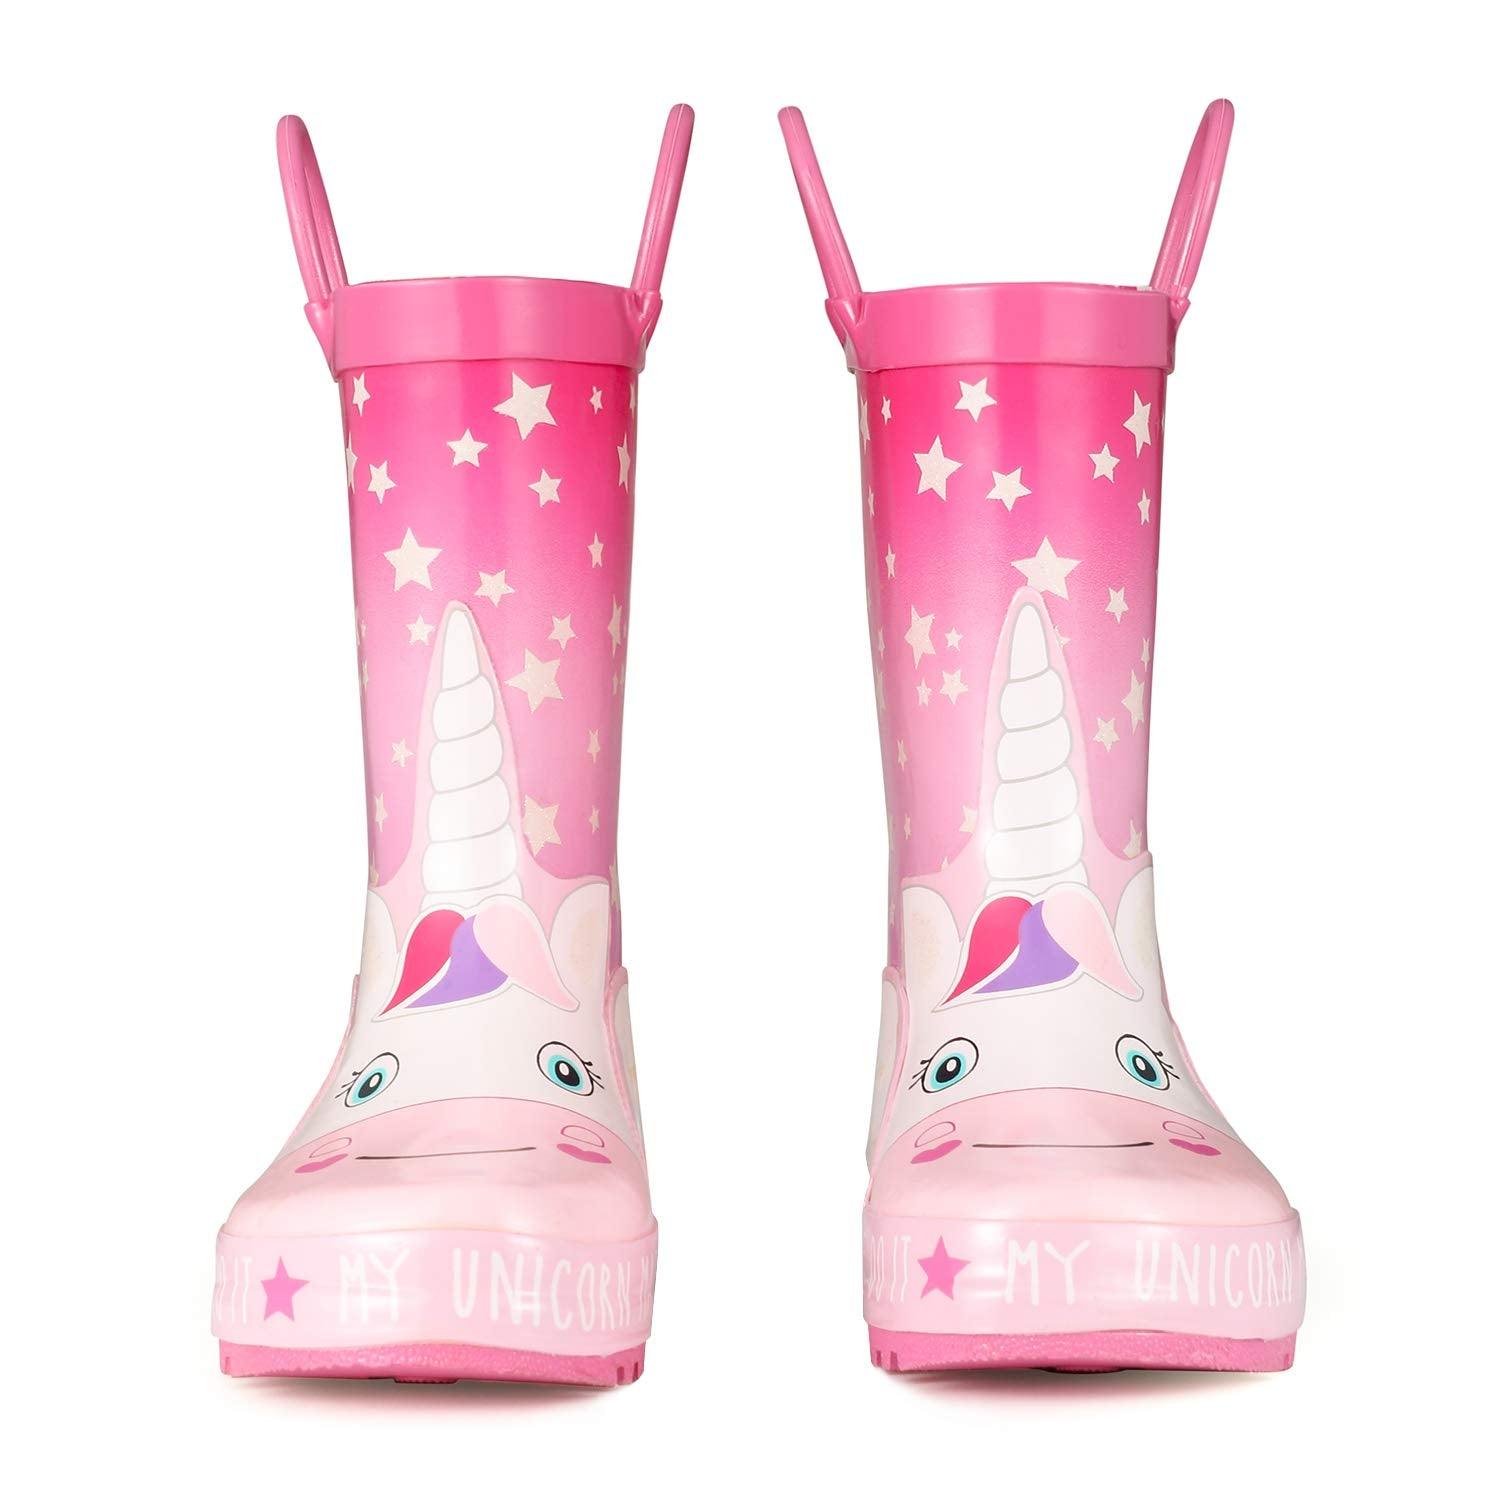 Unicorn star rain boots with handles